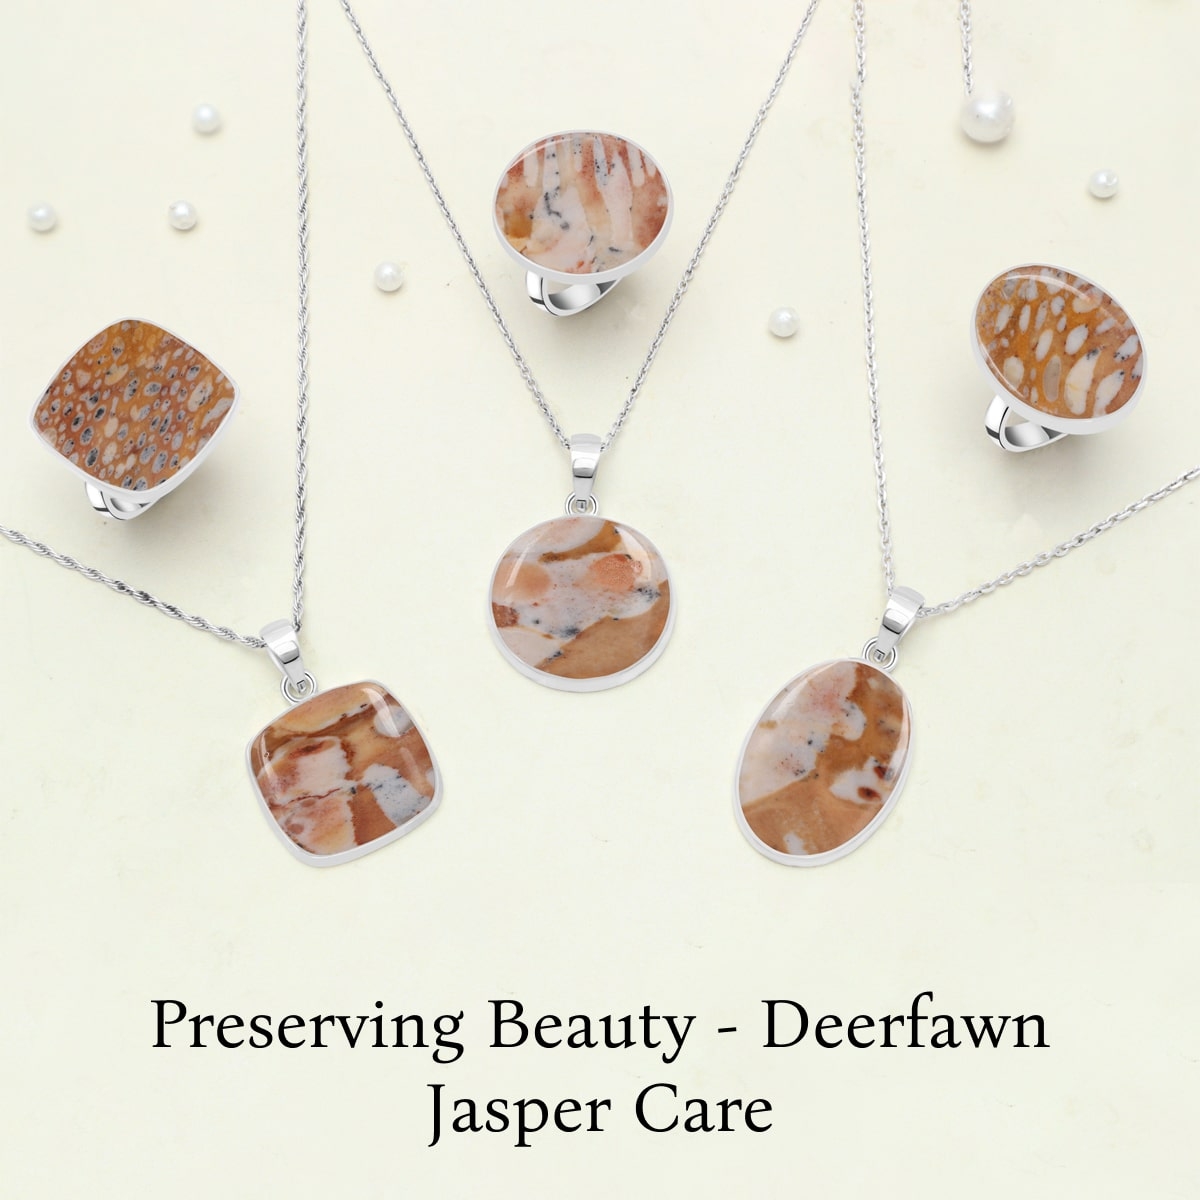 Proper Care Of Deerfawn Jasper